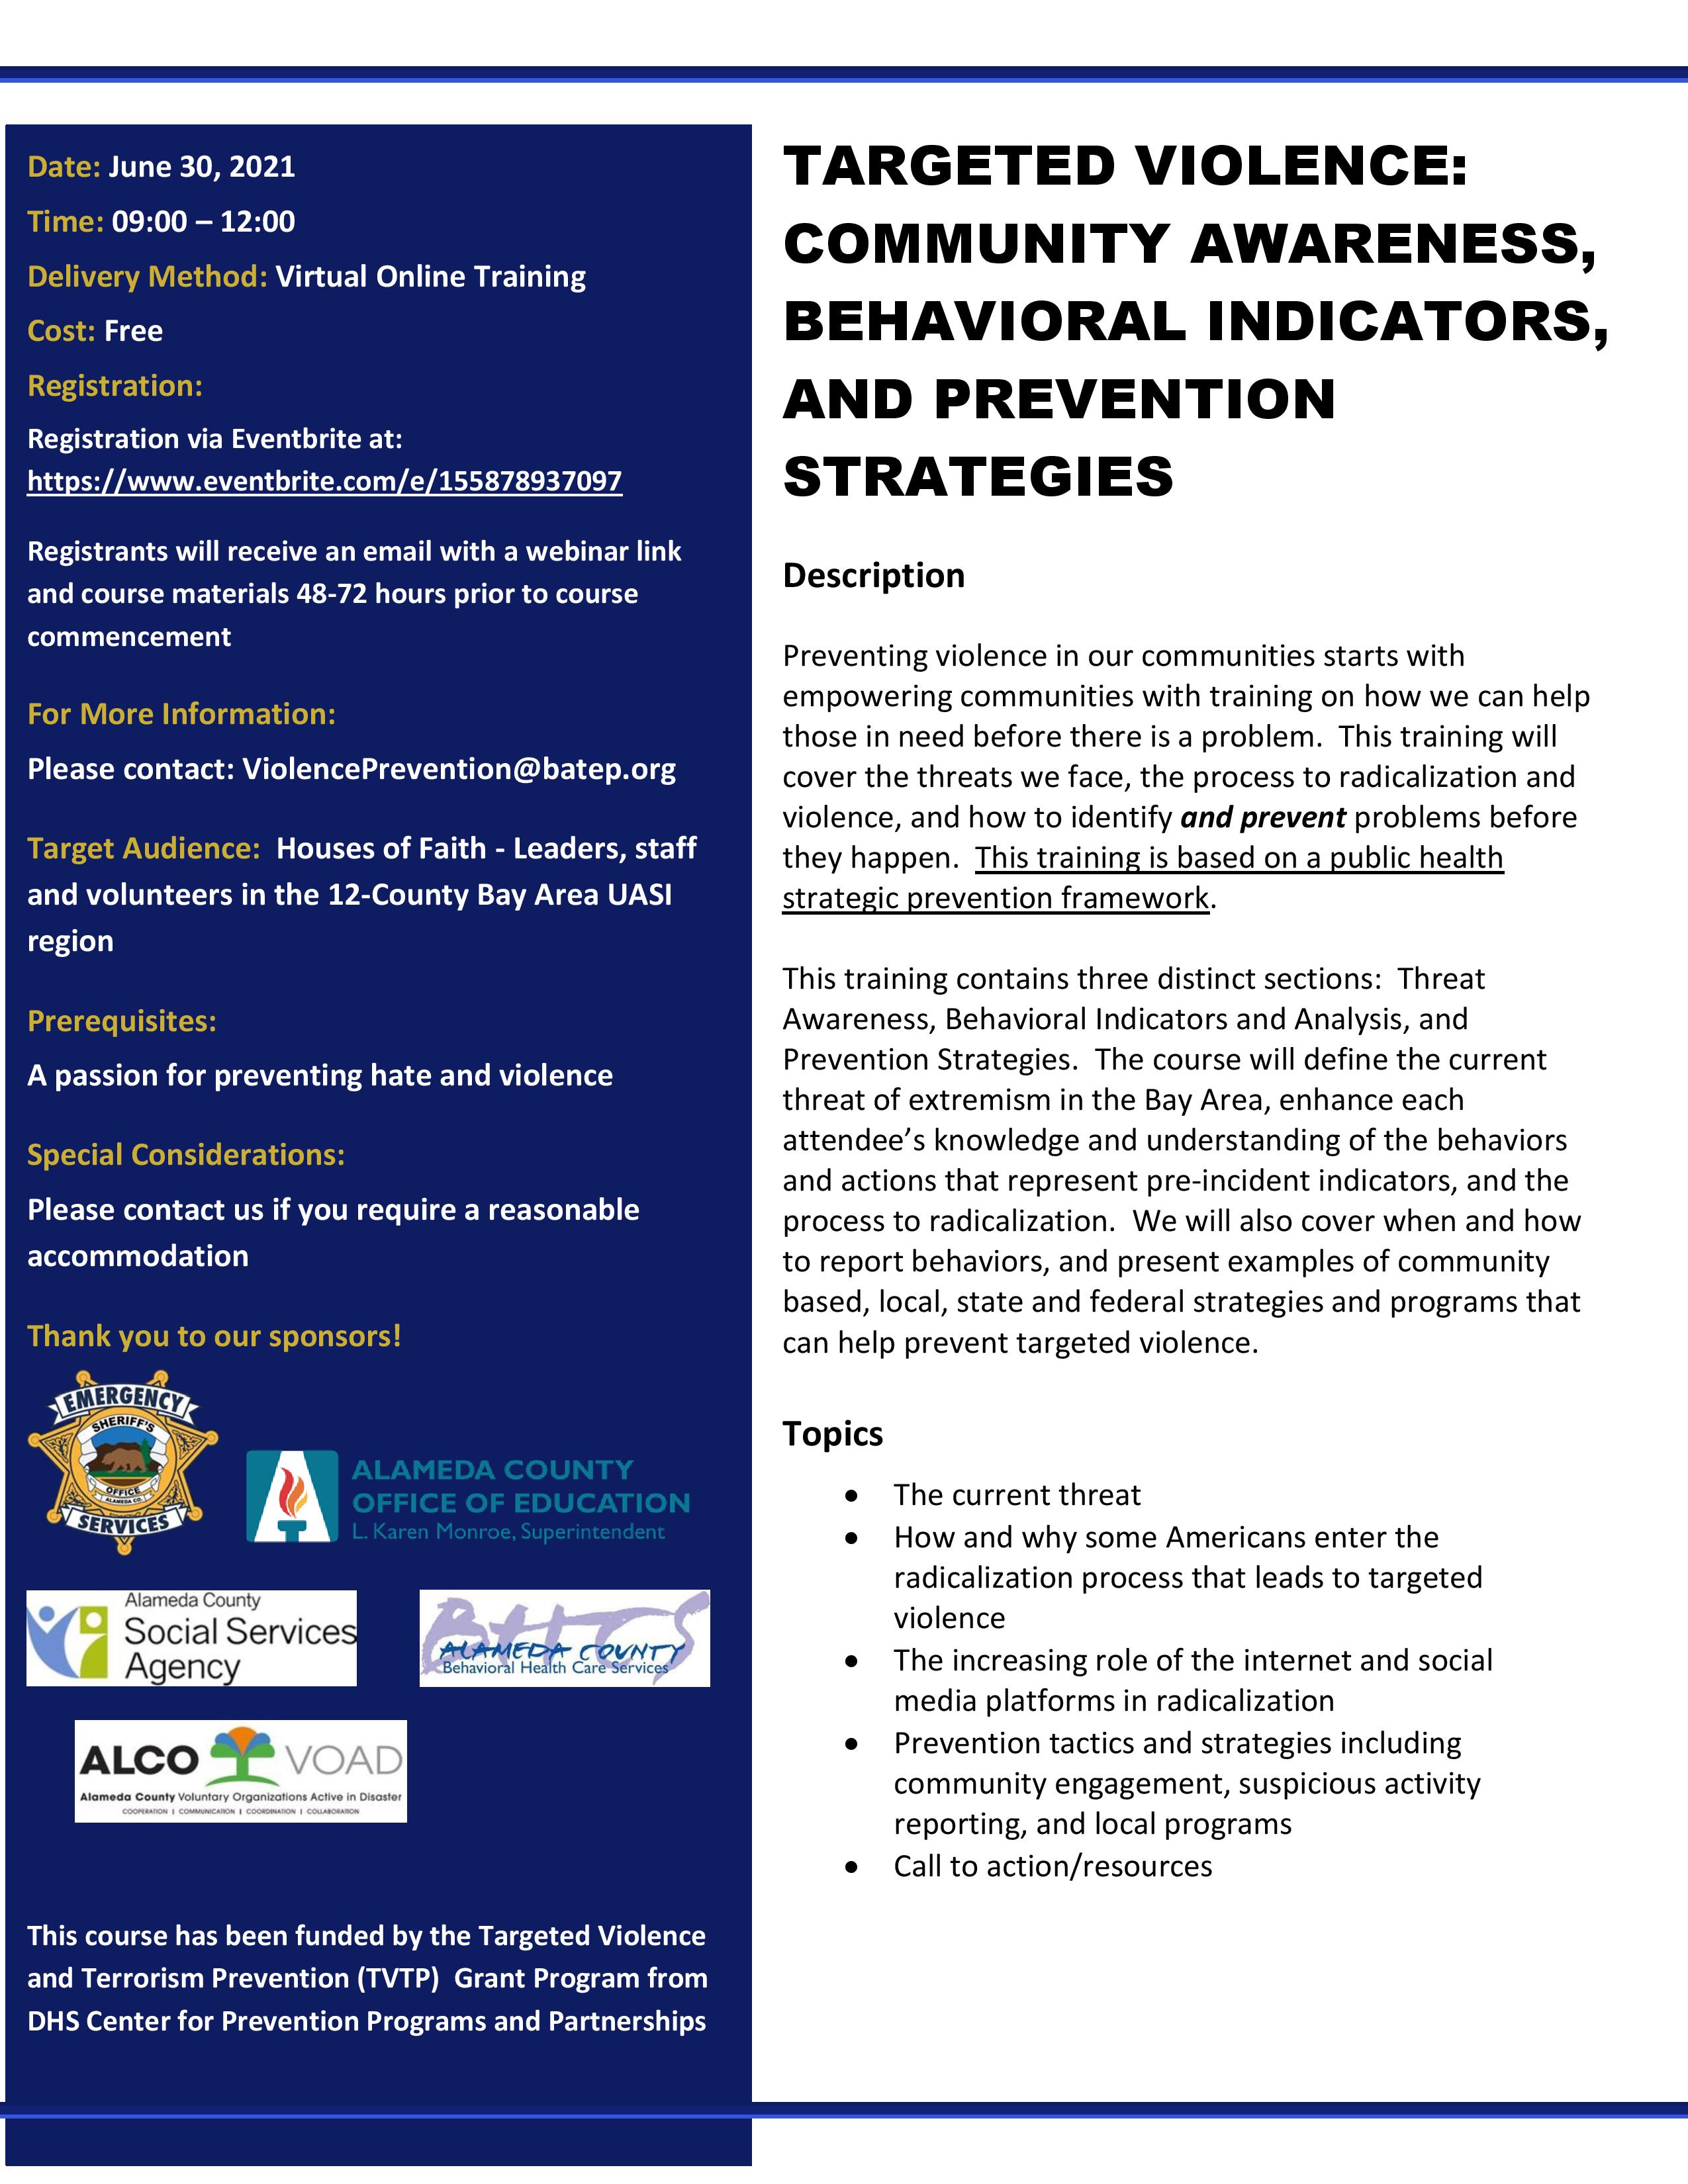 Targeted Violence: Community Awareness Behavioral Indicators San